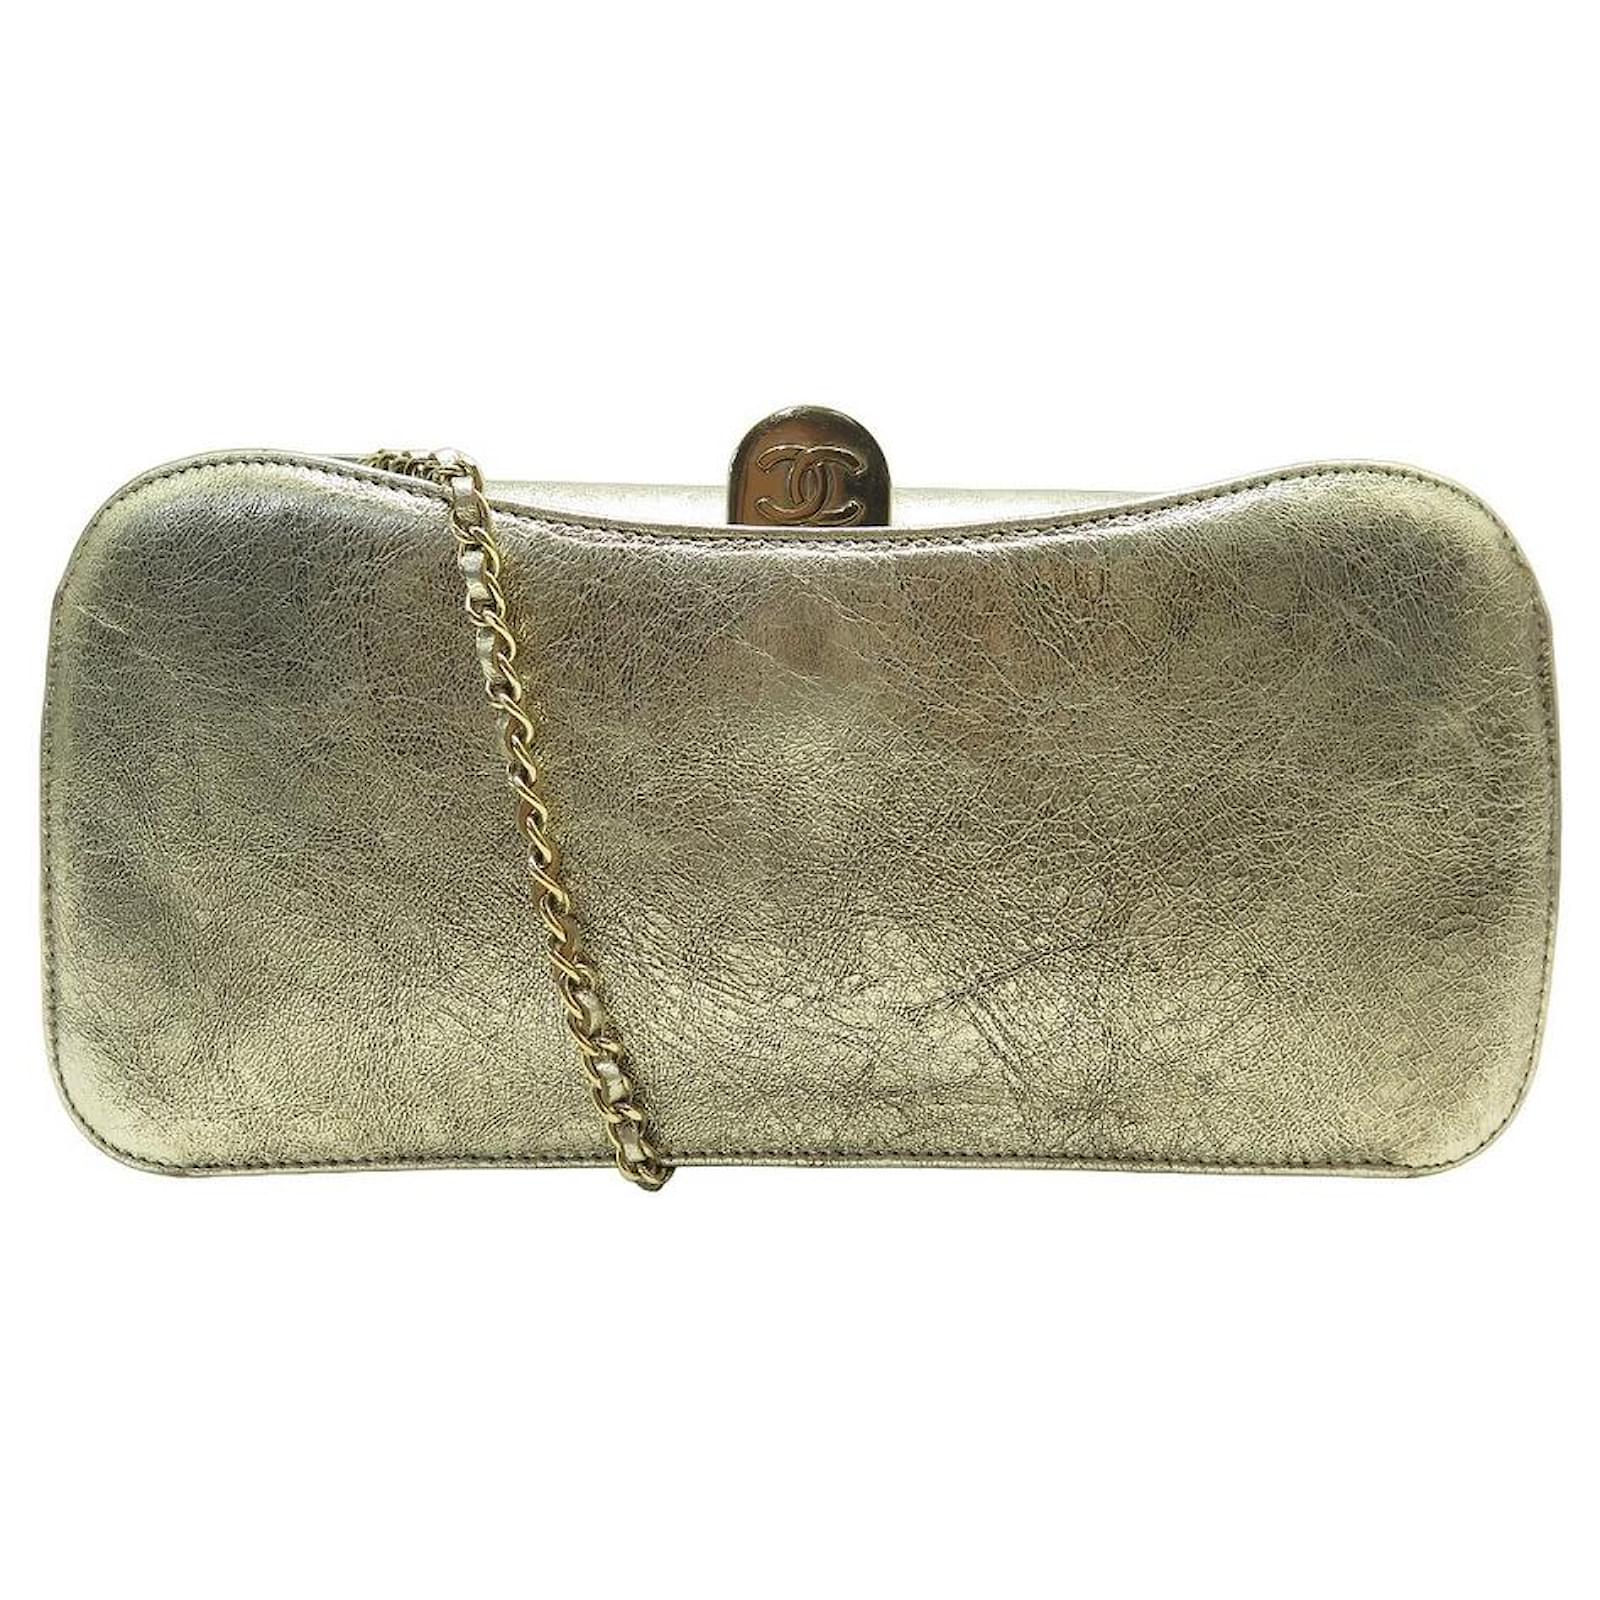 Clutch Bags Chanel Chanel Handbag Gold Pouch Leather Chain Shoulder Golden Clutch Bag